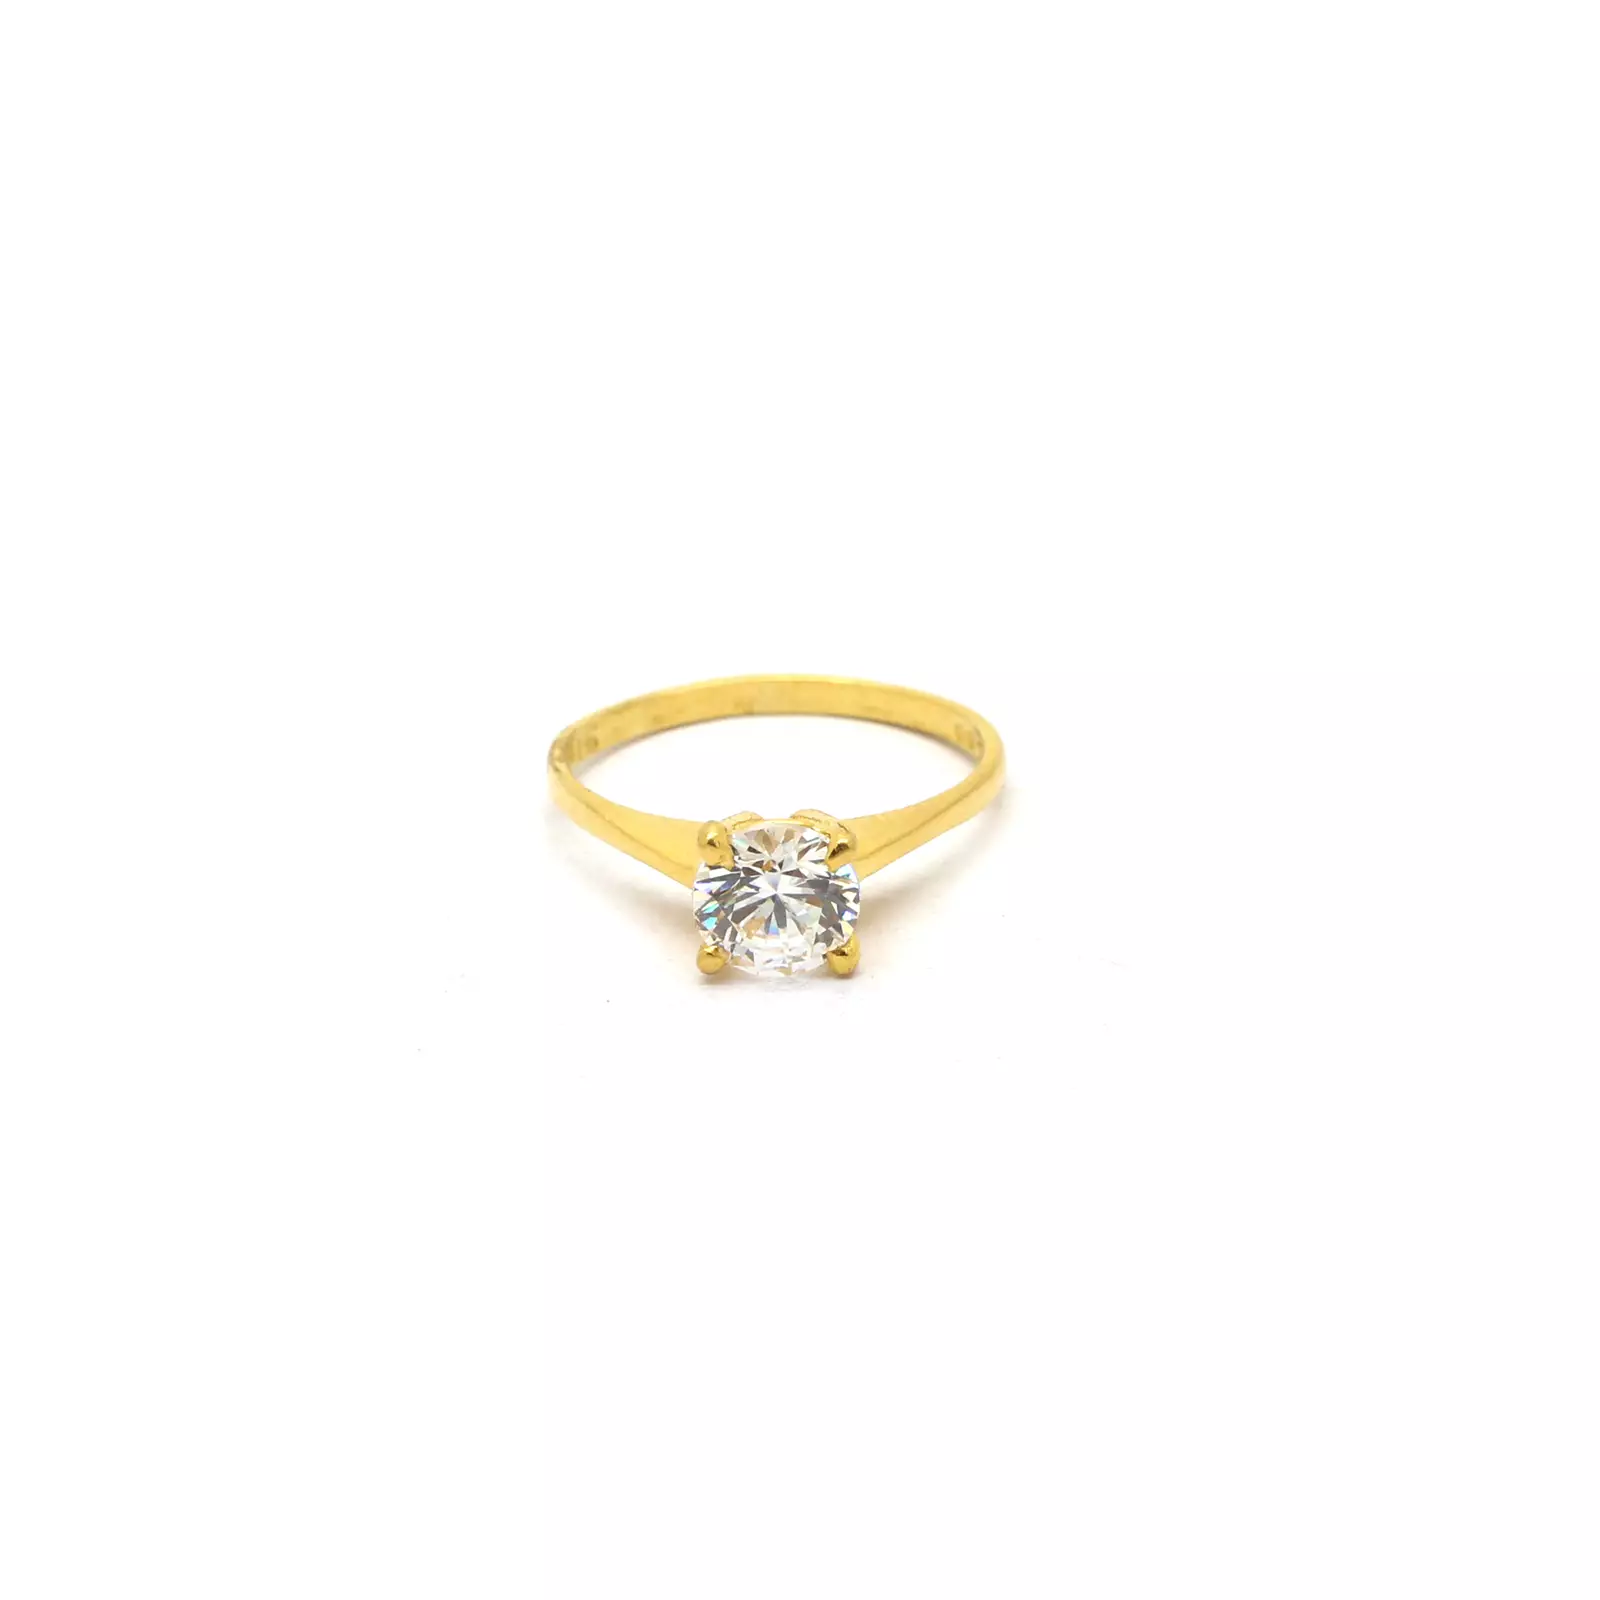 18k Ring for newborn baby Price: 5,000... - BALA GOLD Jewelry | Facebook